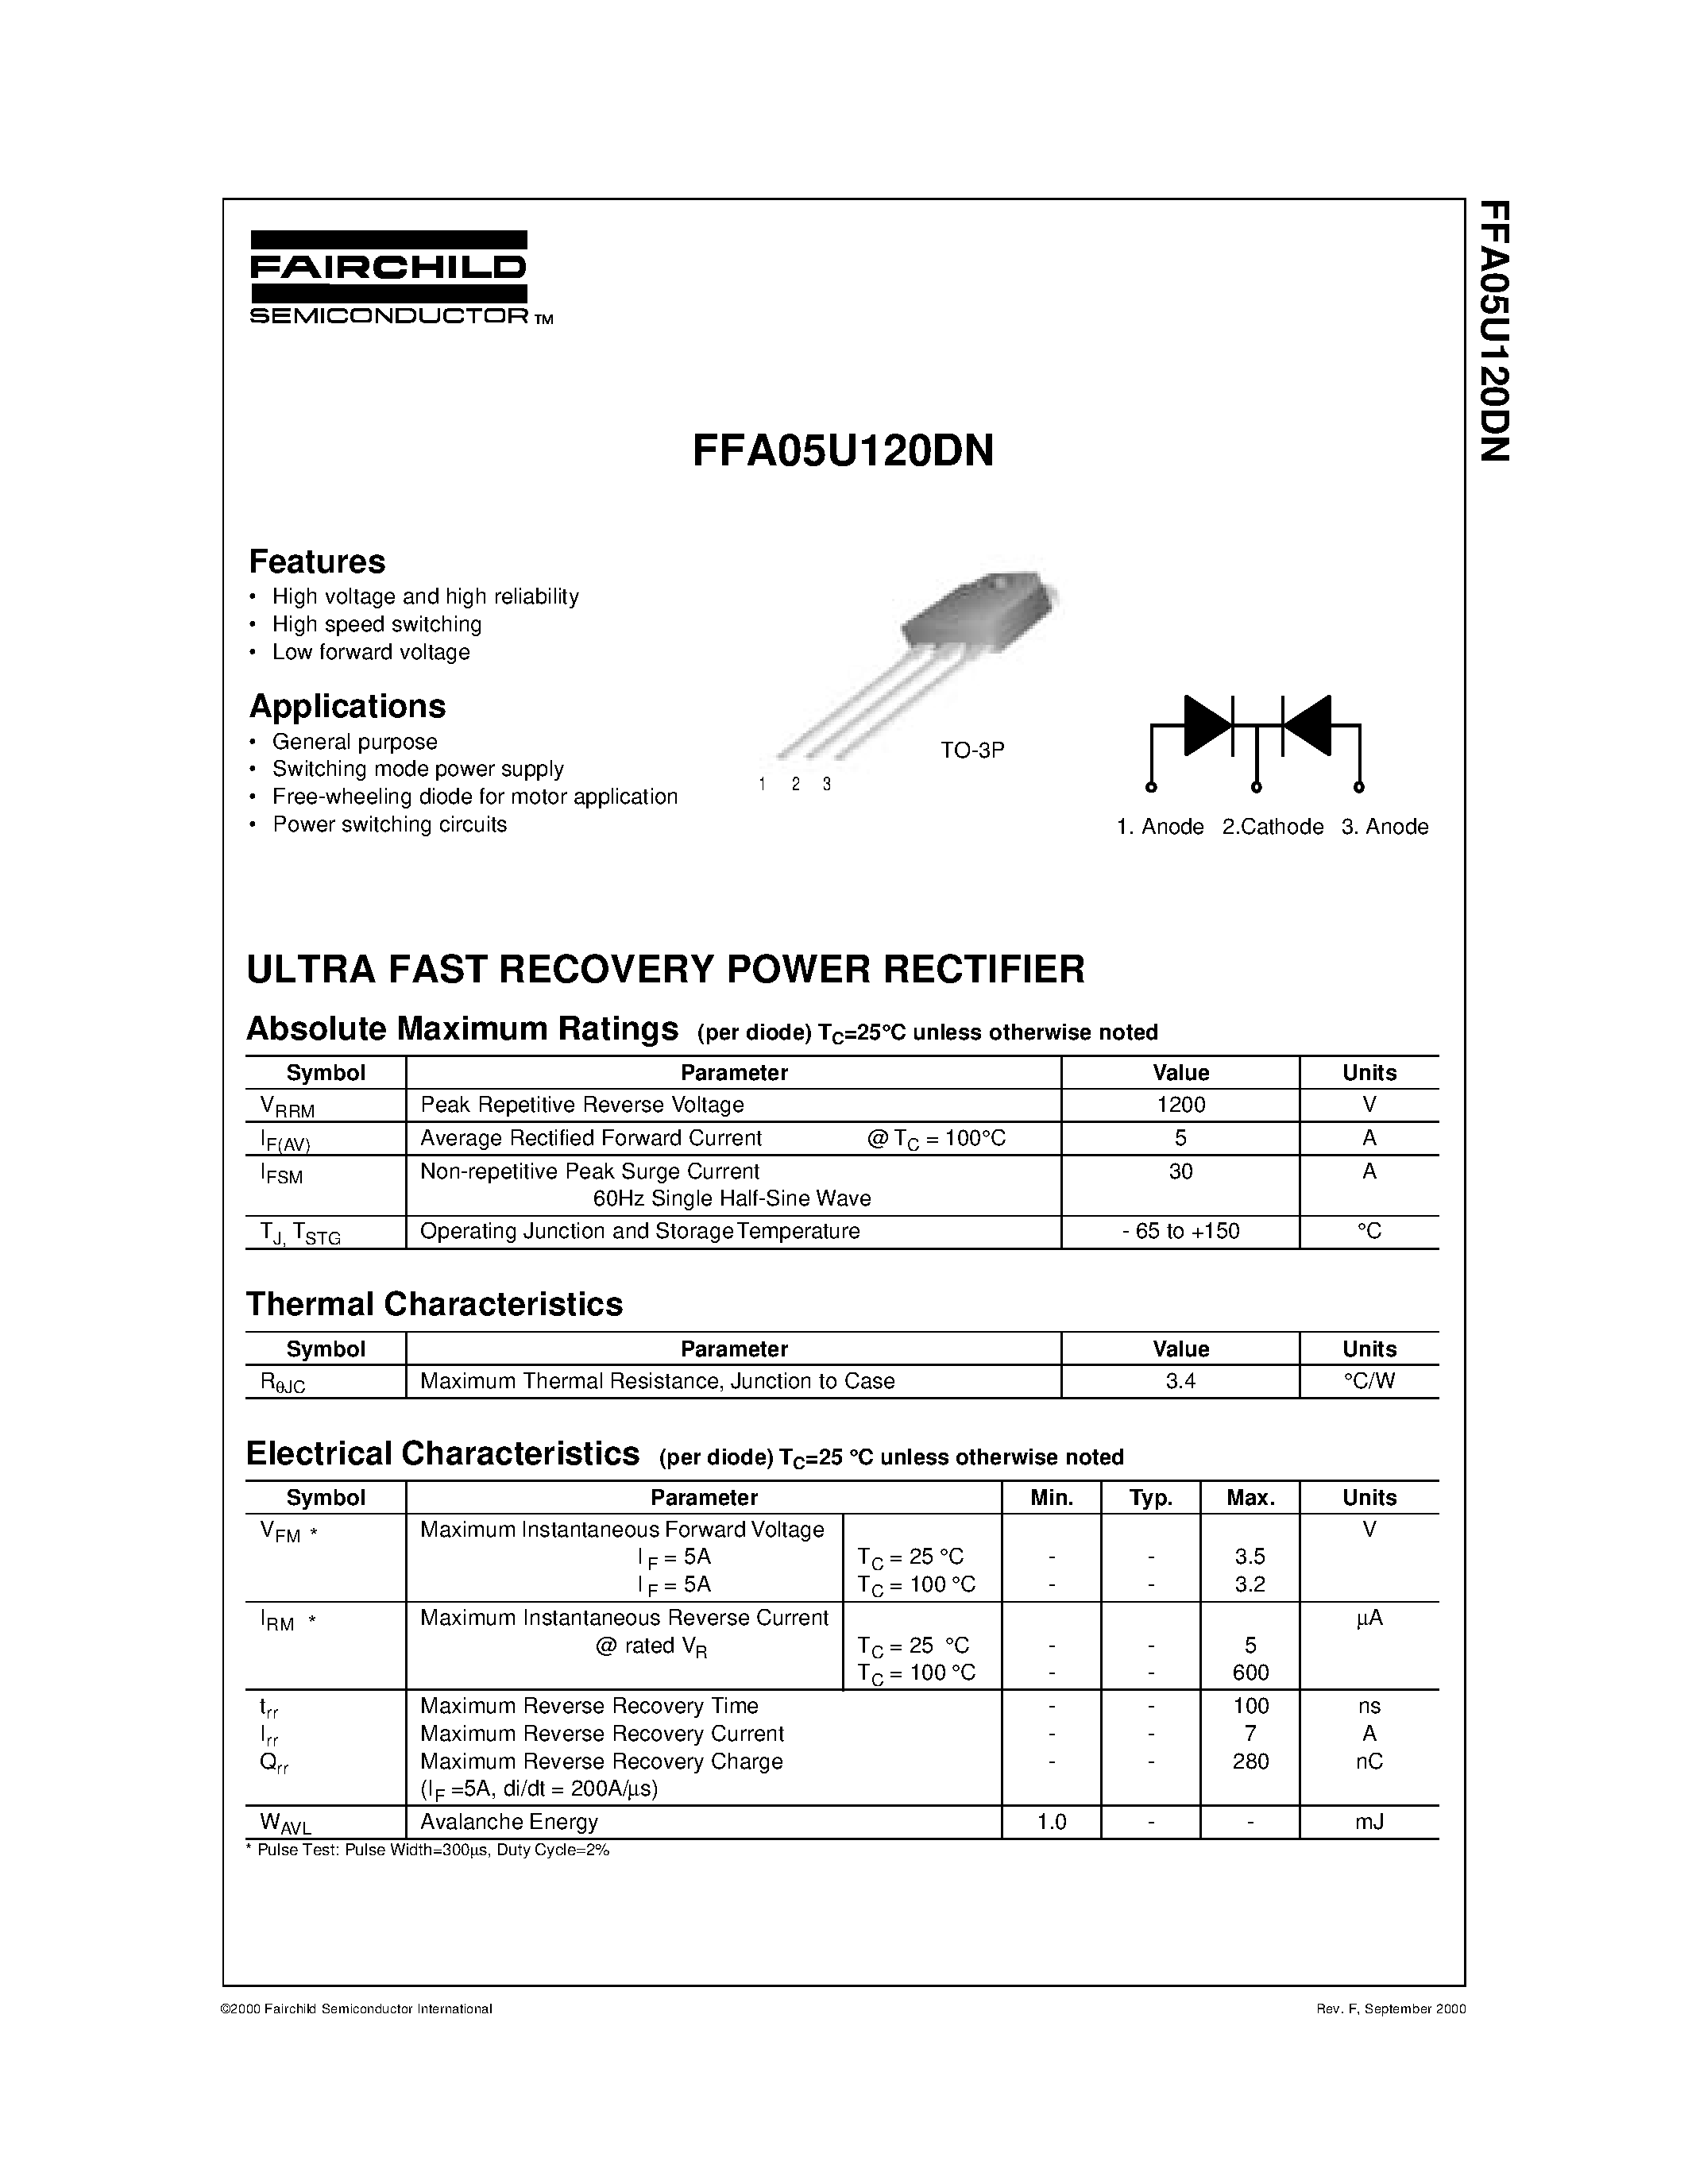 Datasheet FFA05U120DN - ULTRA FAST RECOVERY POWER RECTIFIER page 1